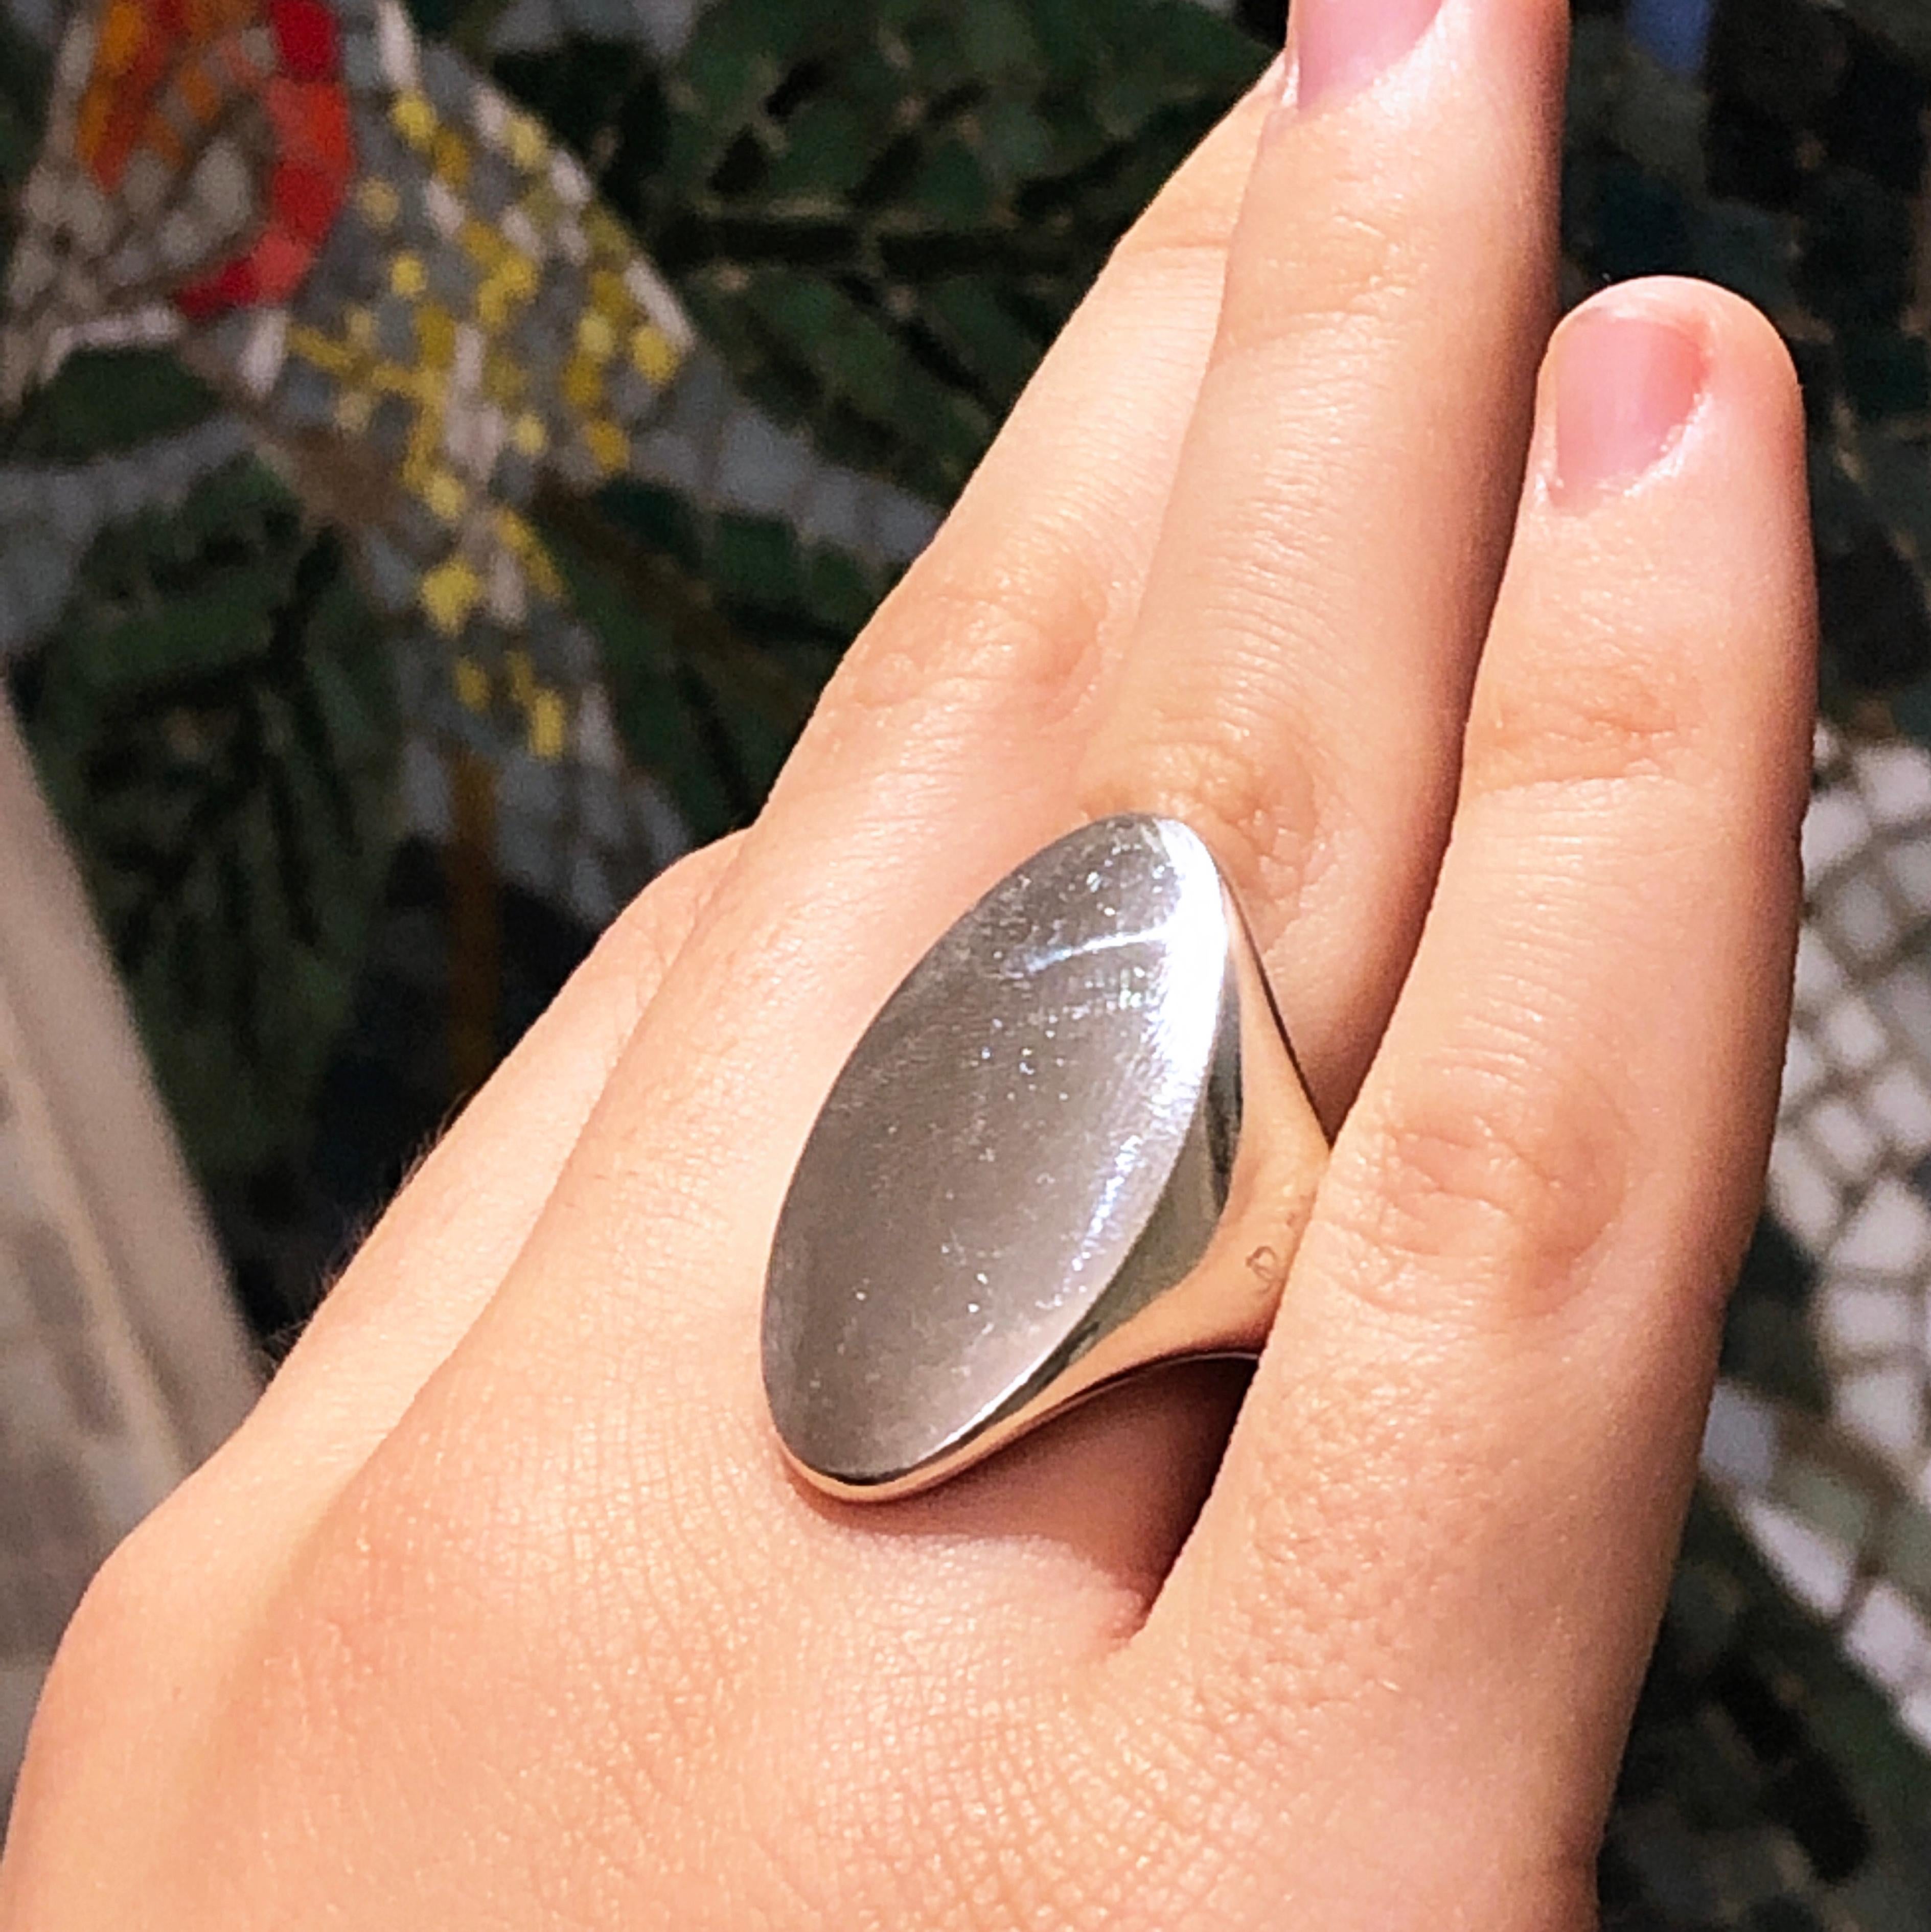 Women's or Men's Pomellato Solid Sterling Silver Elliptical Signet Ring